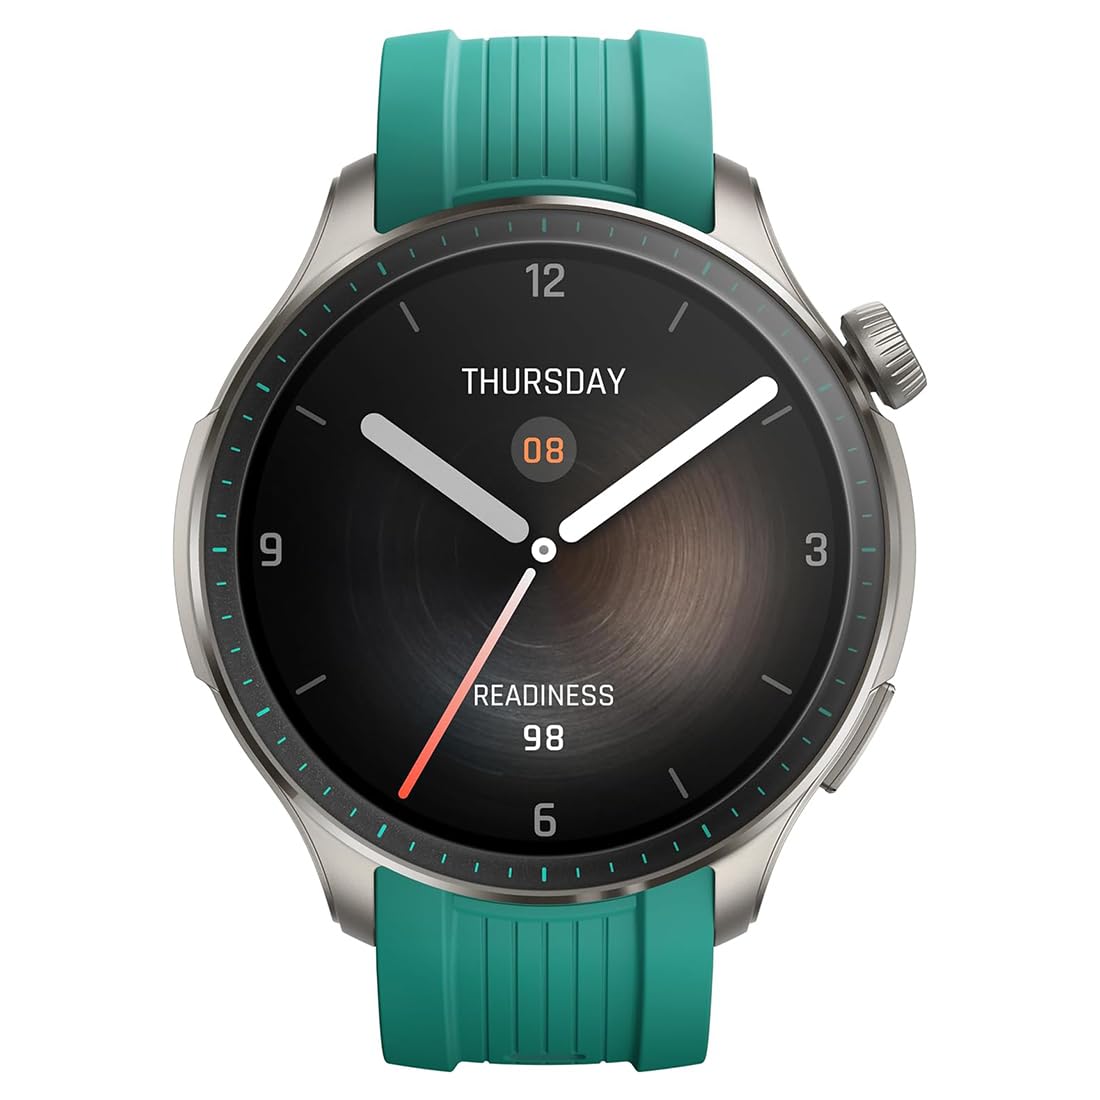 Gizmore Gizfit Glow Smart Watch Review: क्या ये है सुंदर सस्ती स्मार्ट वॉच,  जानें डिटेल